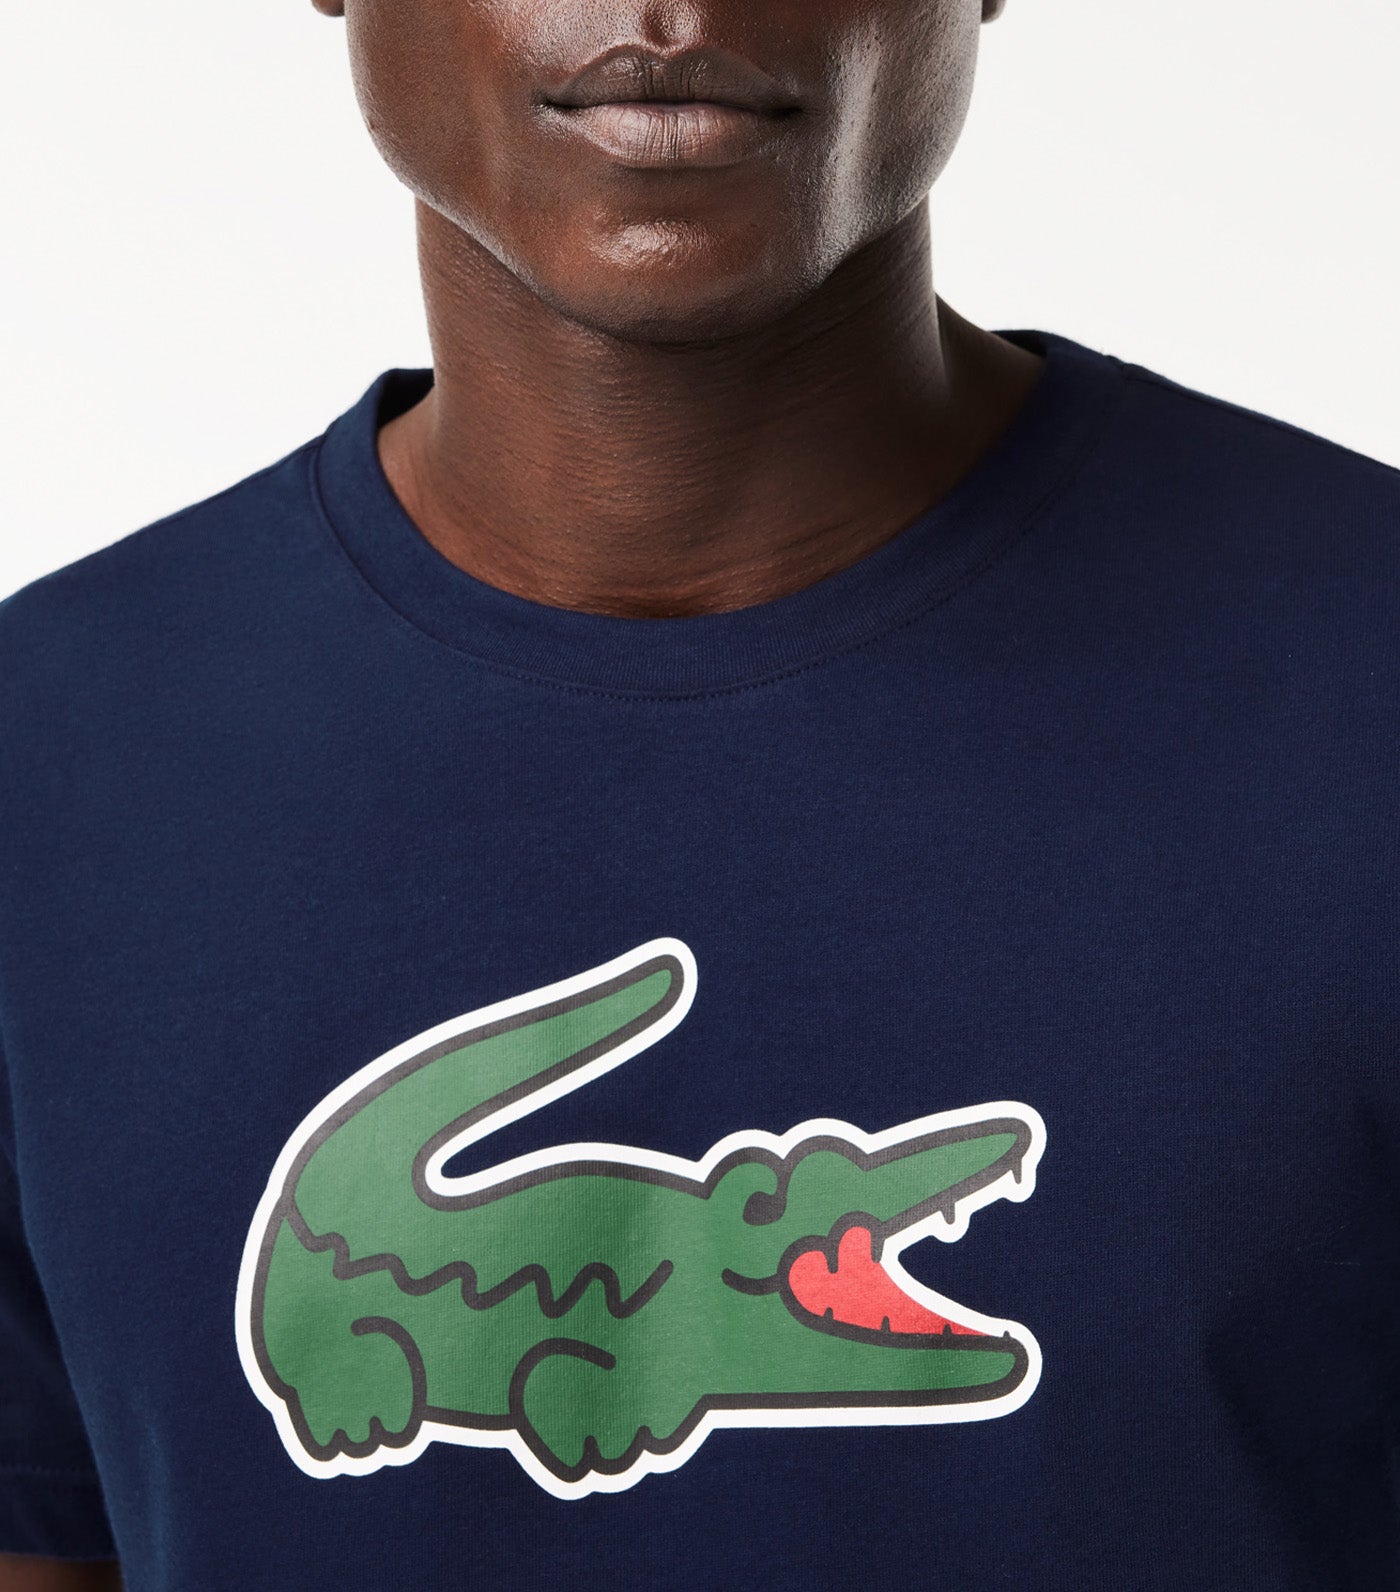 Sport Ultra-Dry Croc Print T-Shirt Navy Blue/Green-White